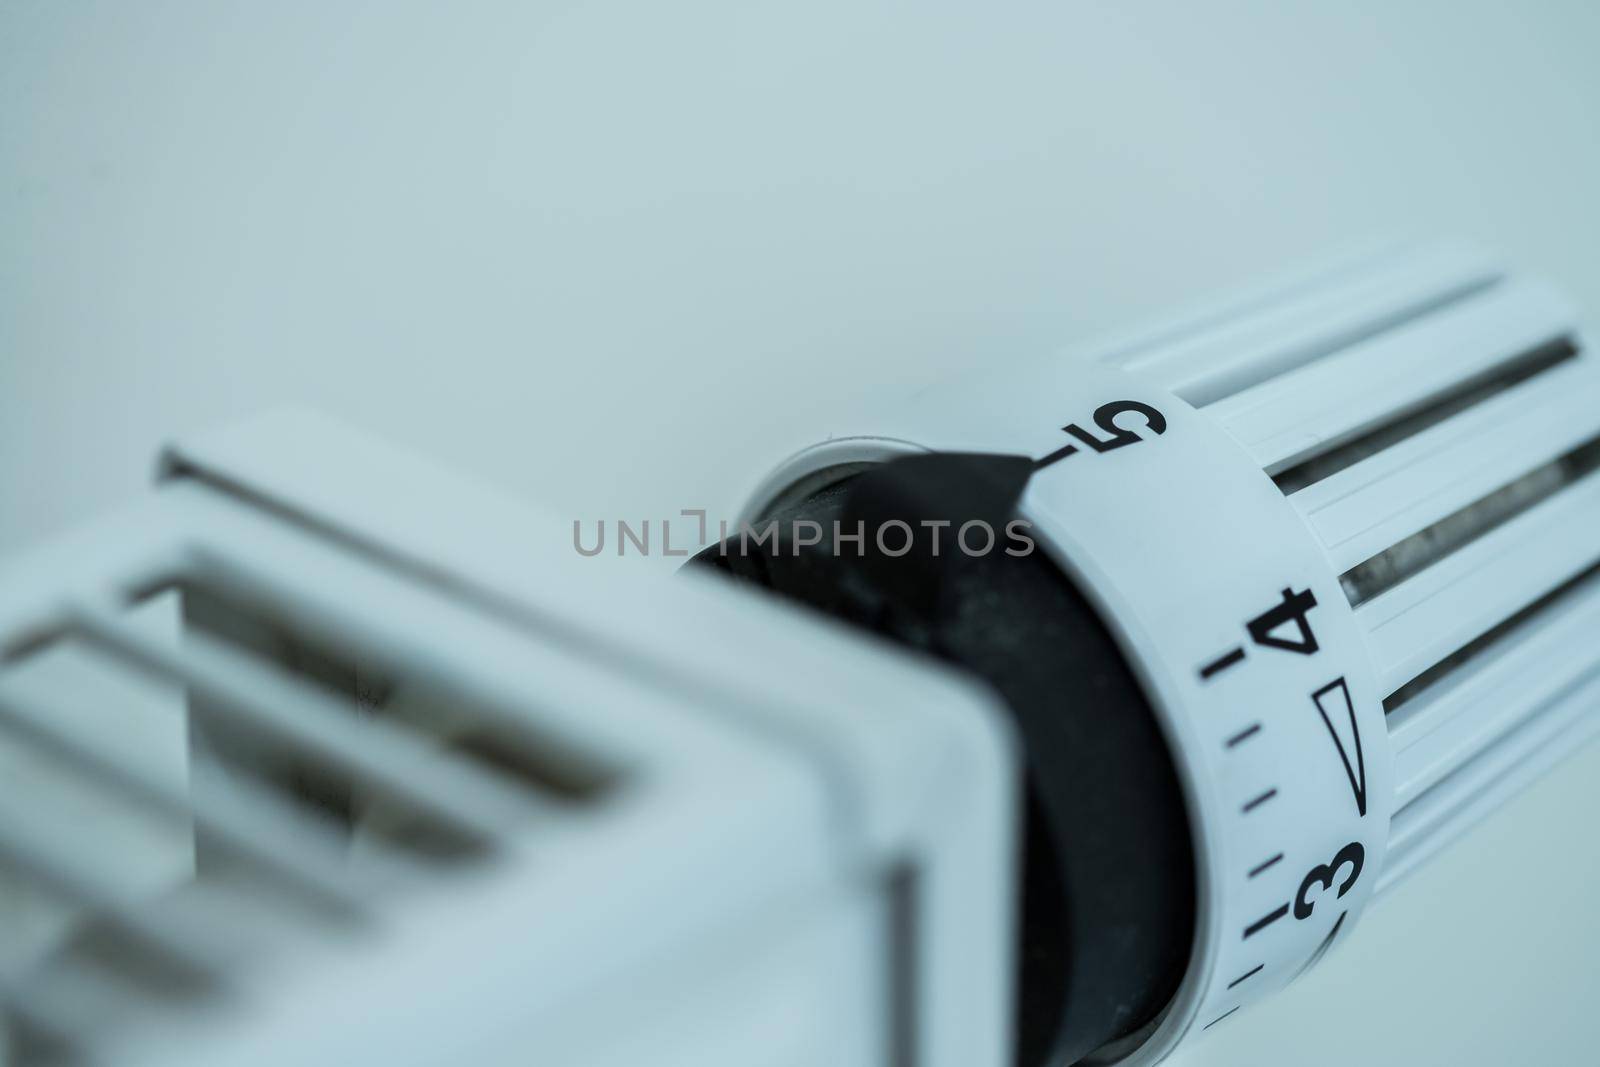 Close up picture of a heat regulator.